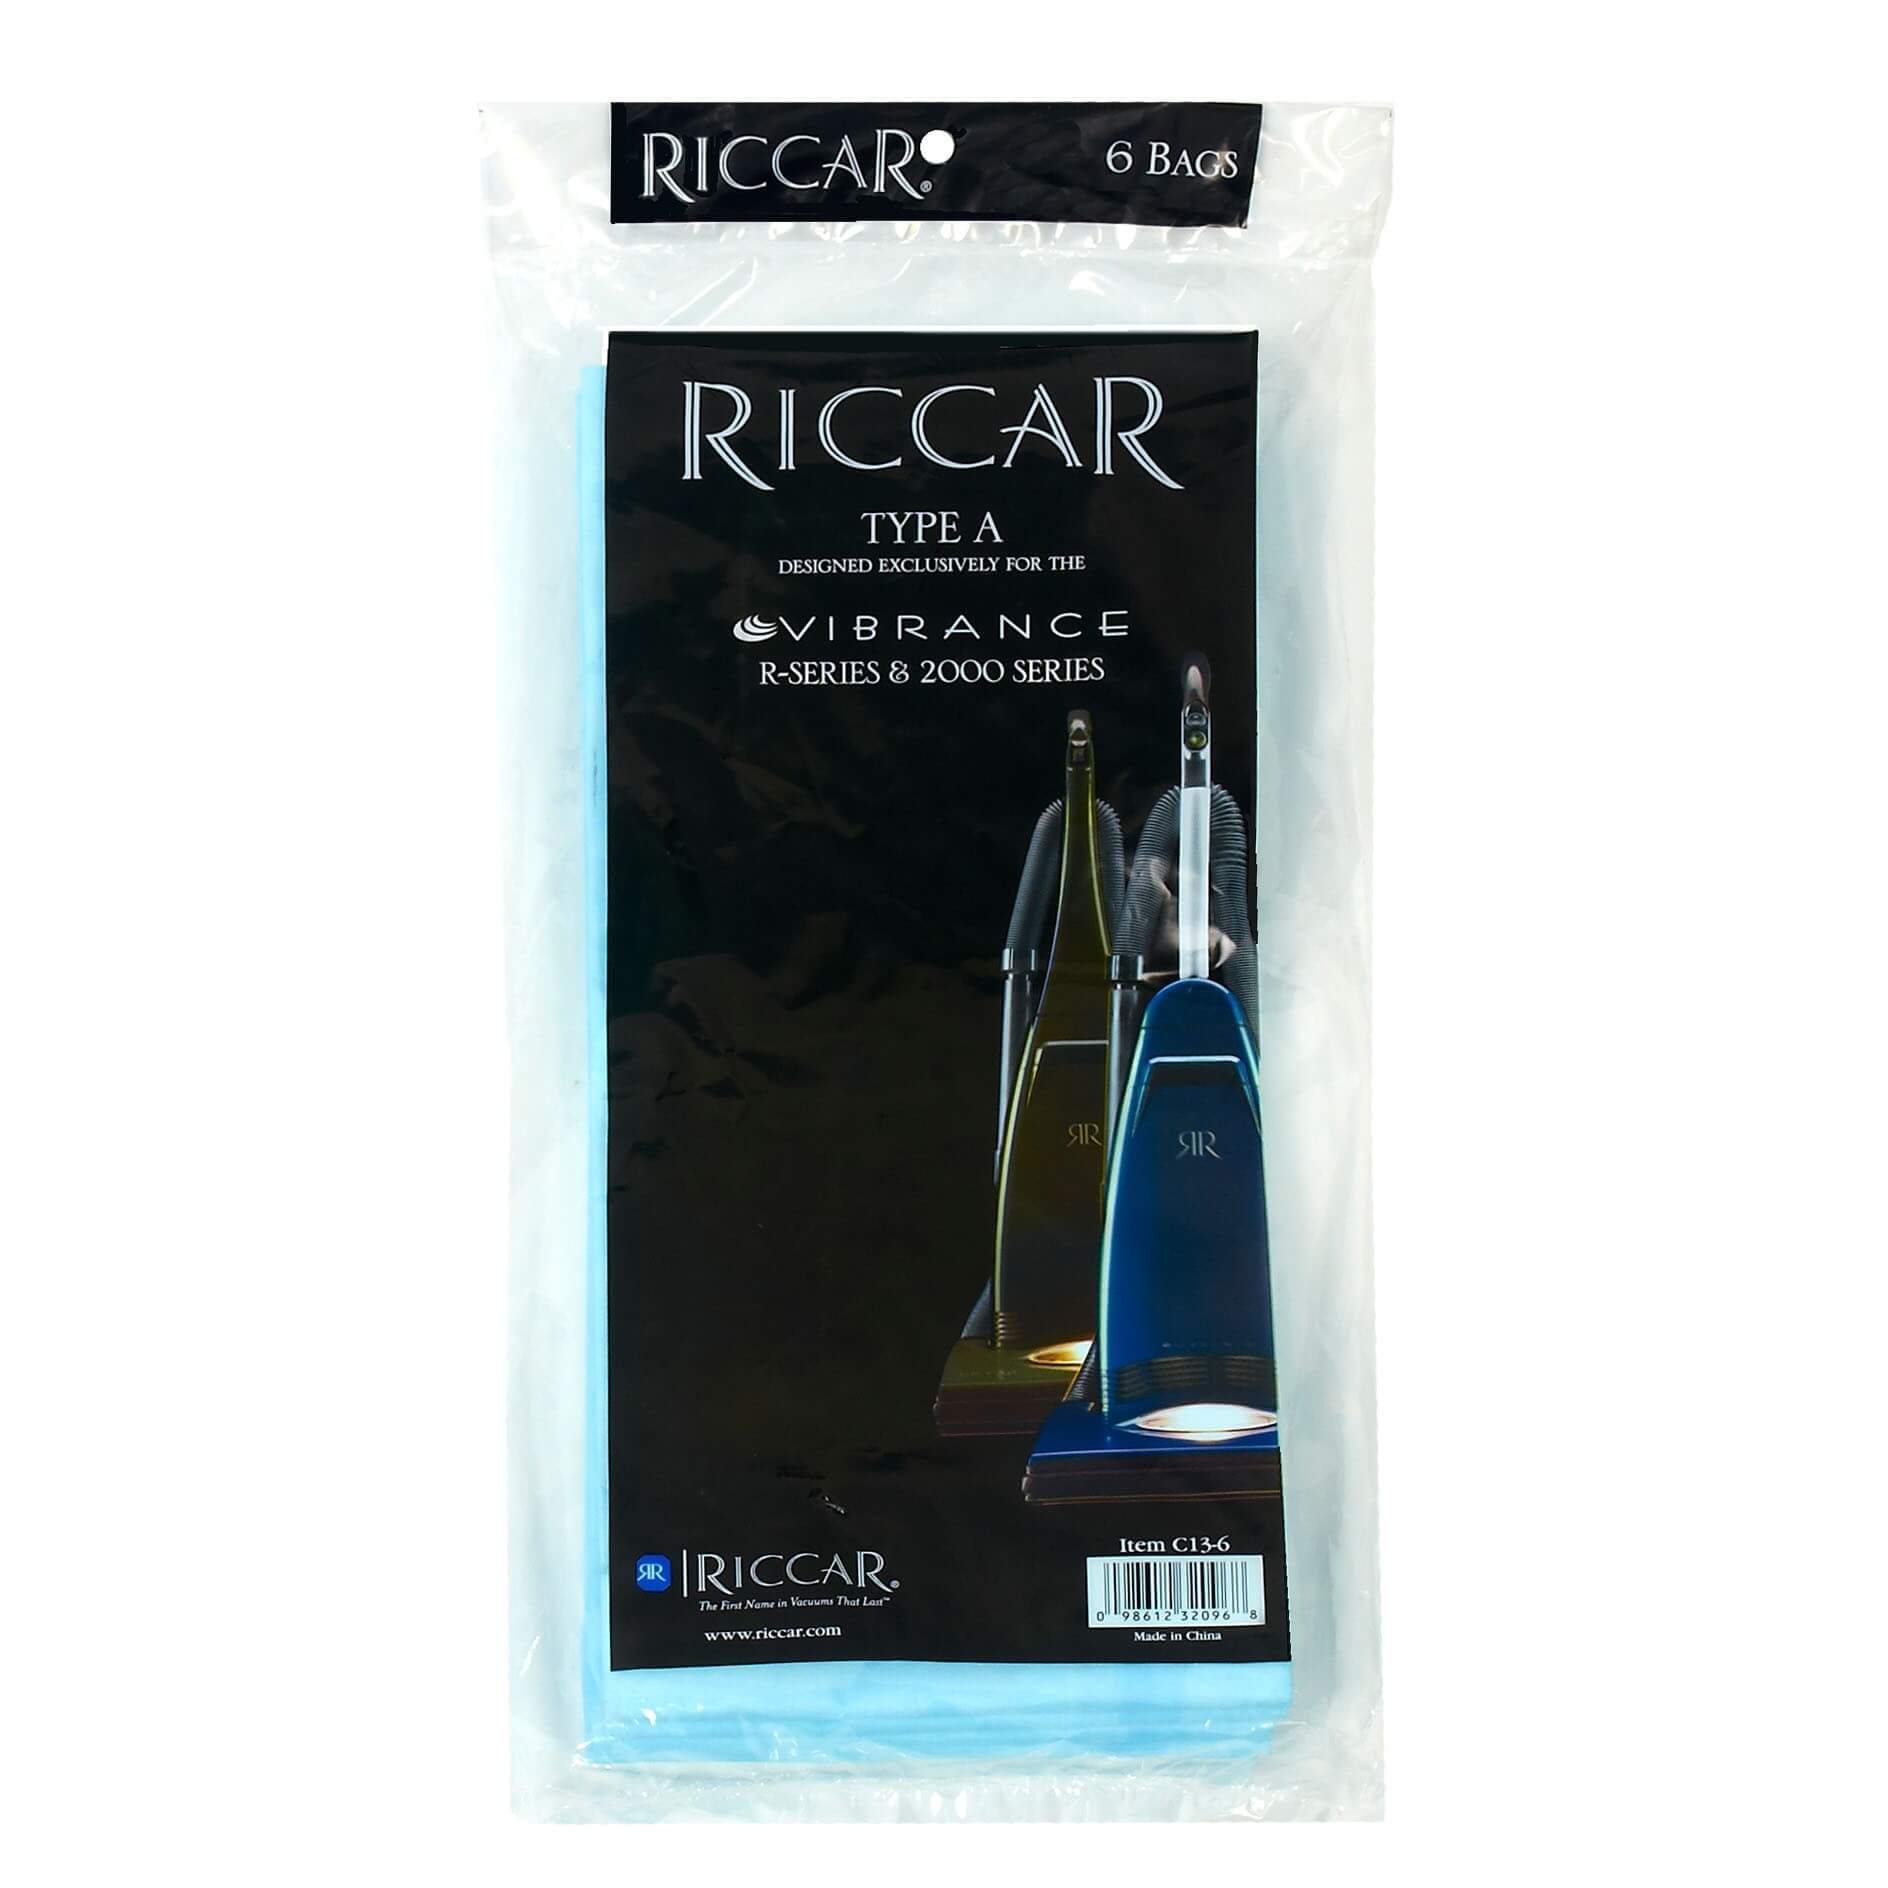 Riccar Vibrance Type A Bags